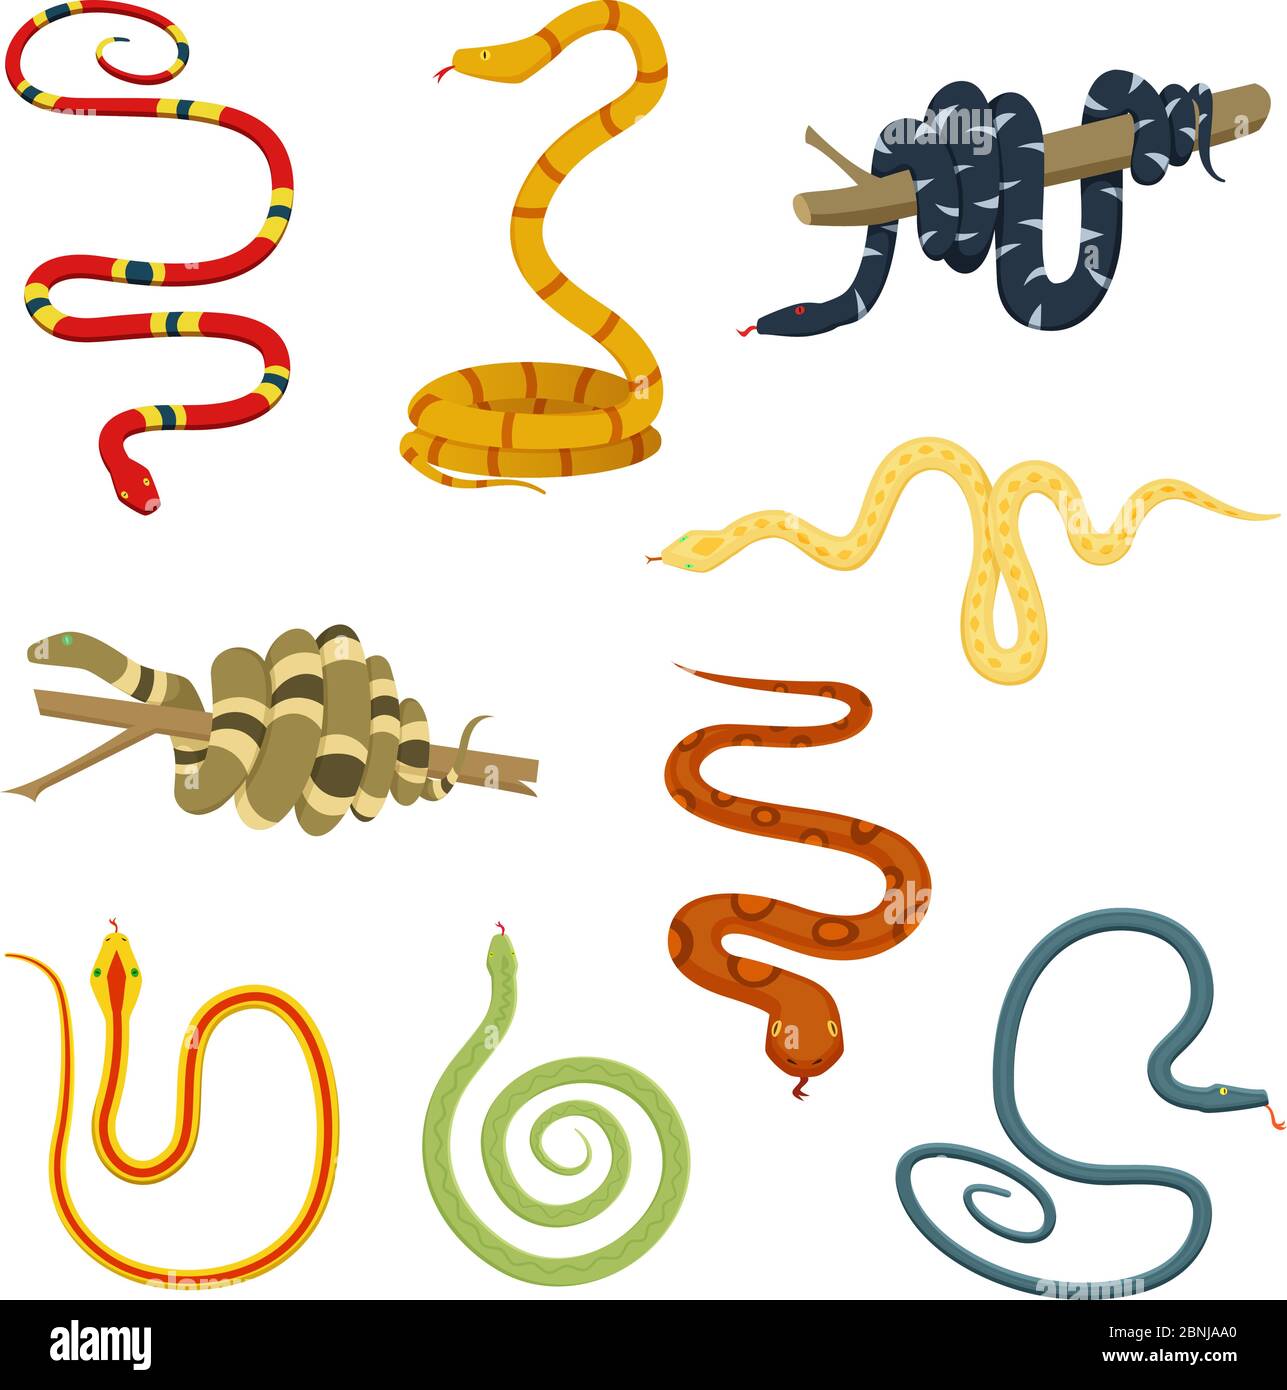 Photos de reptiles colorés. Serpents toxiques Illustration de Vecteur